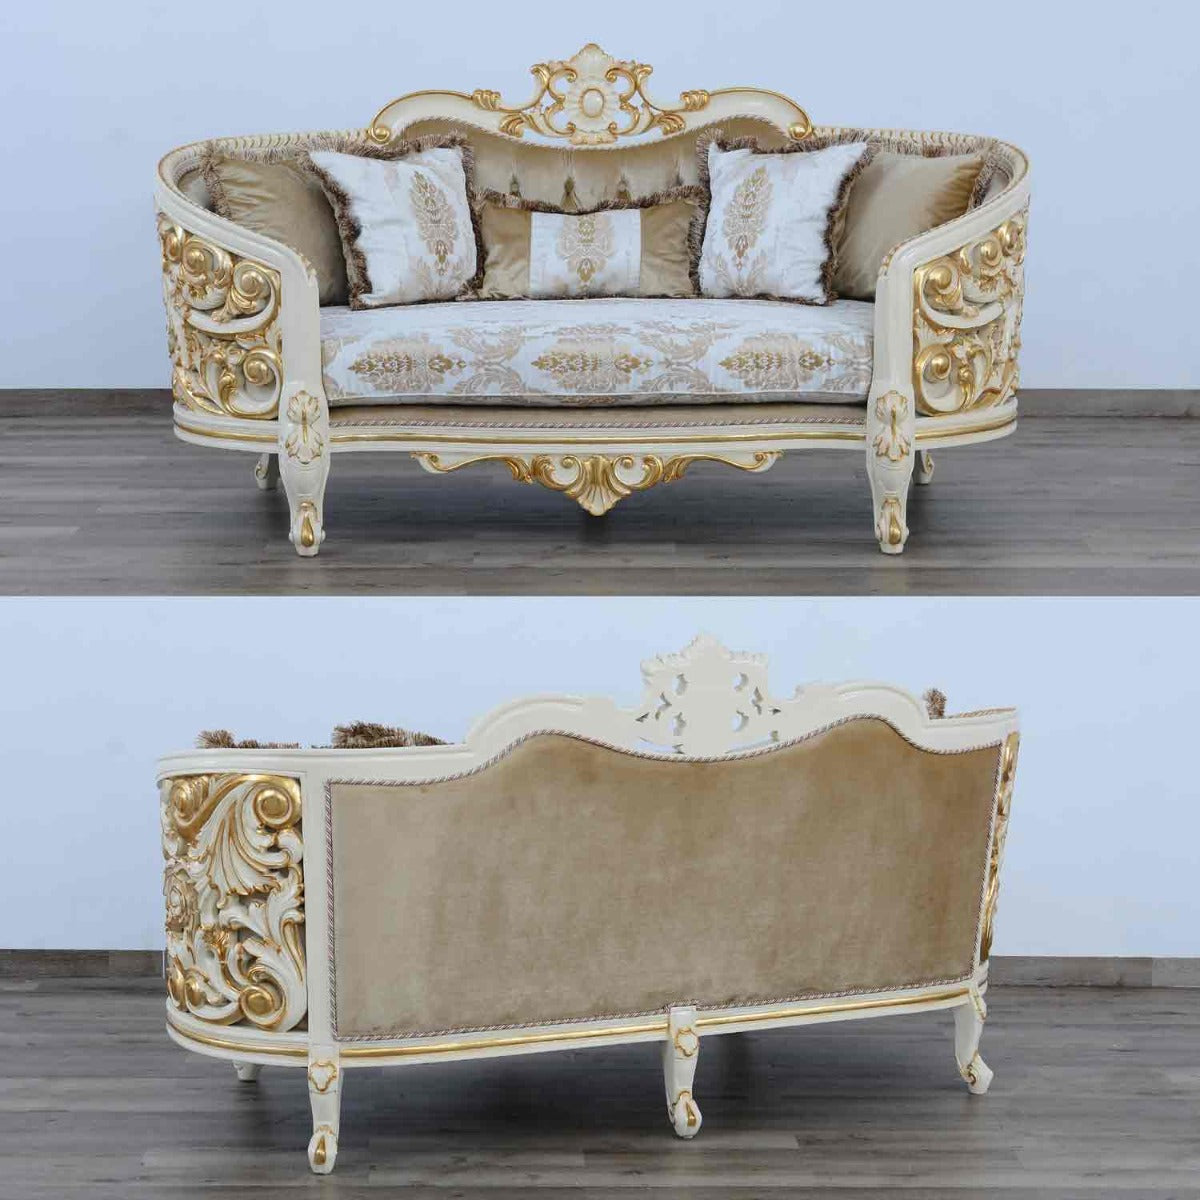 European Furniture - Bellagio 3 Piece Living Room Set in Beige - EF-30017-3SET - New Star Living